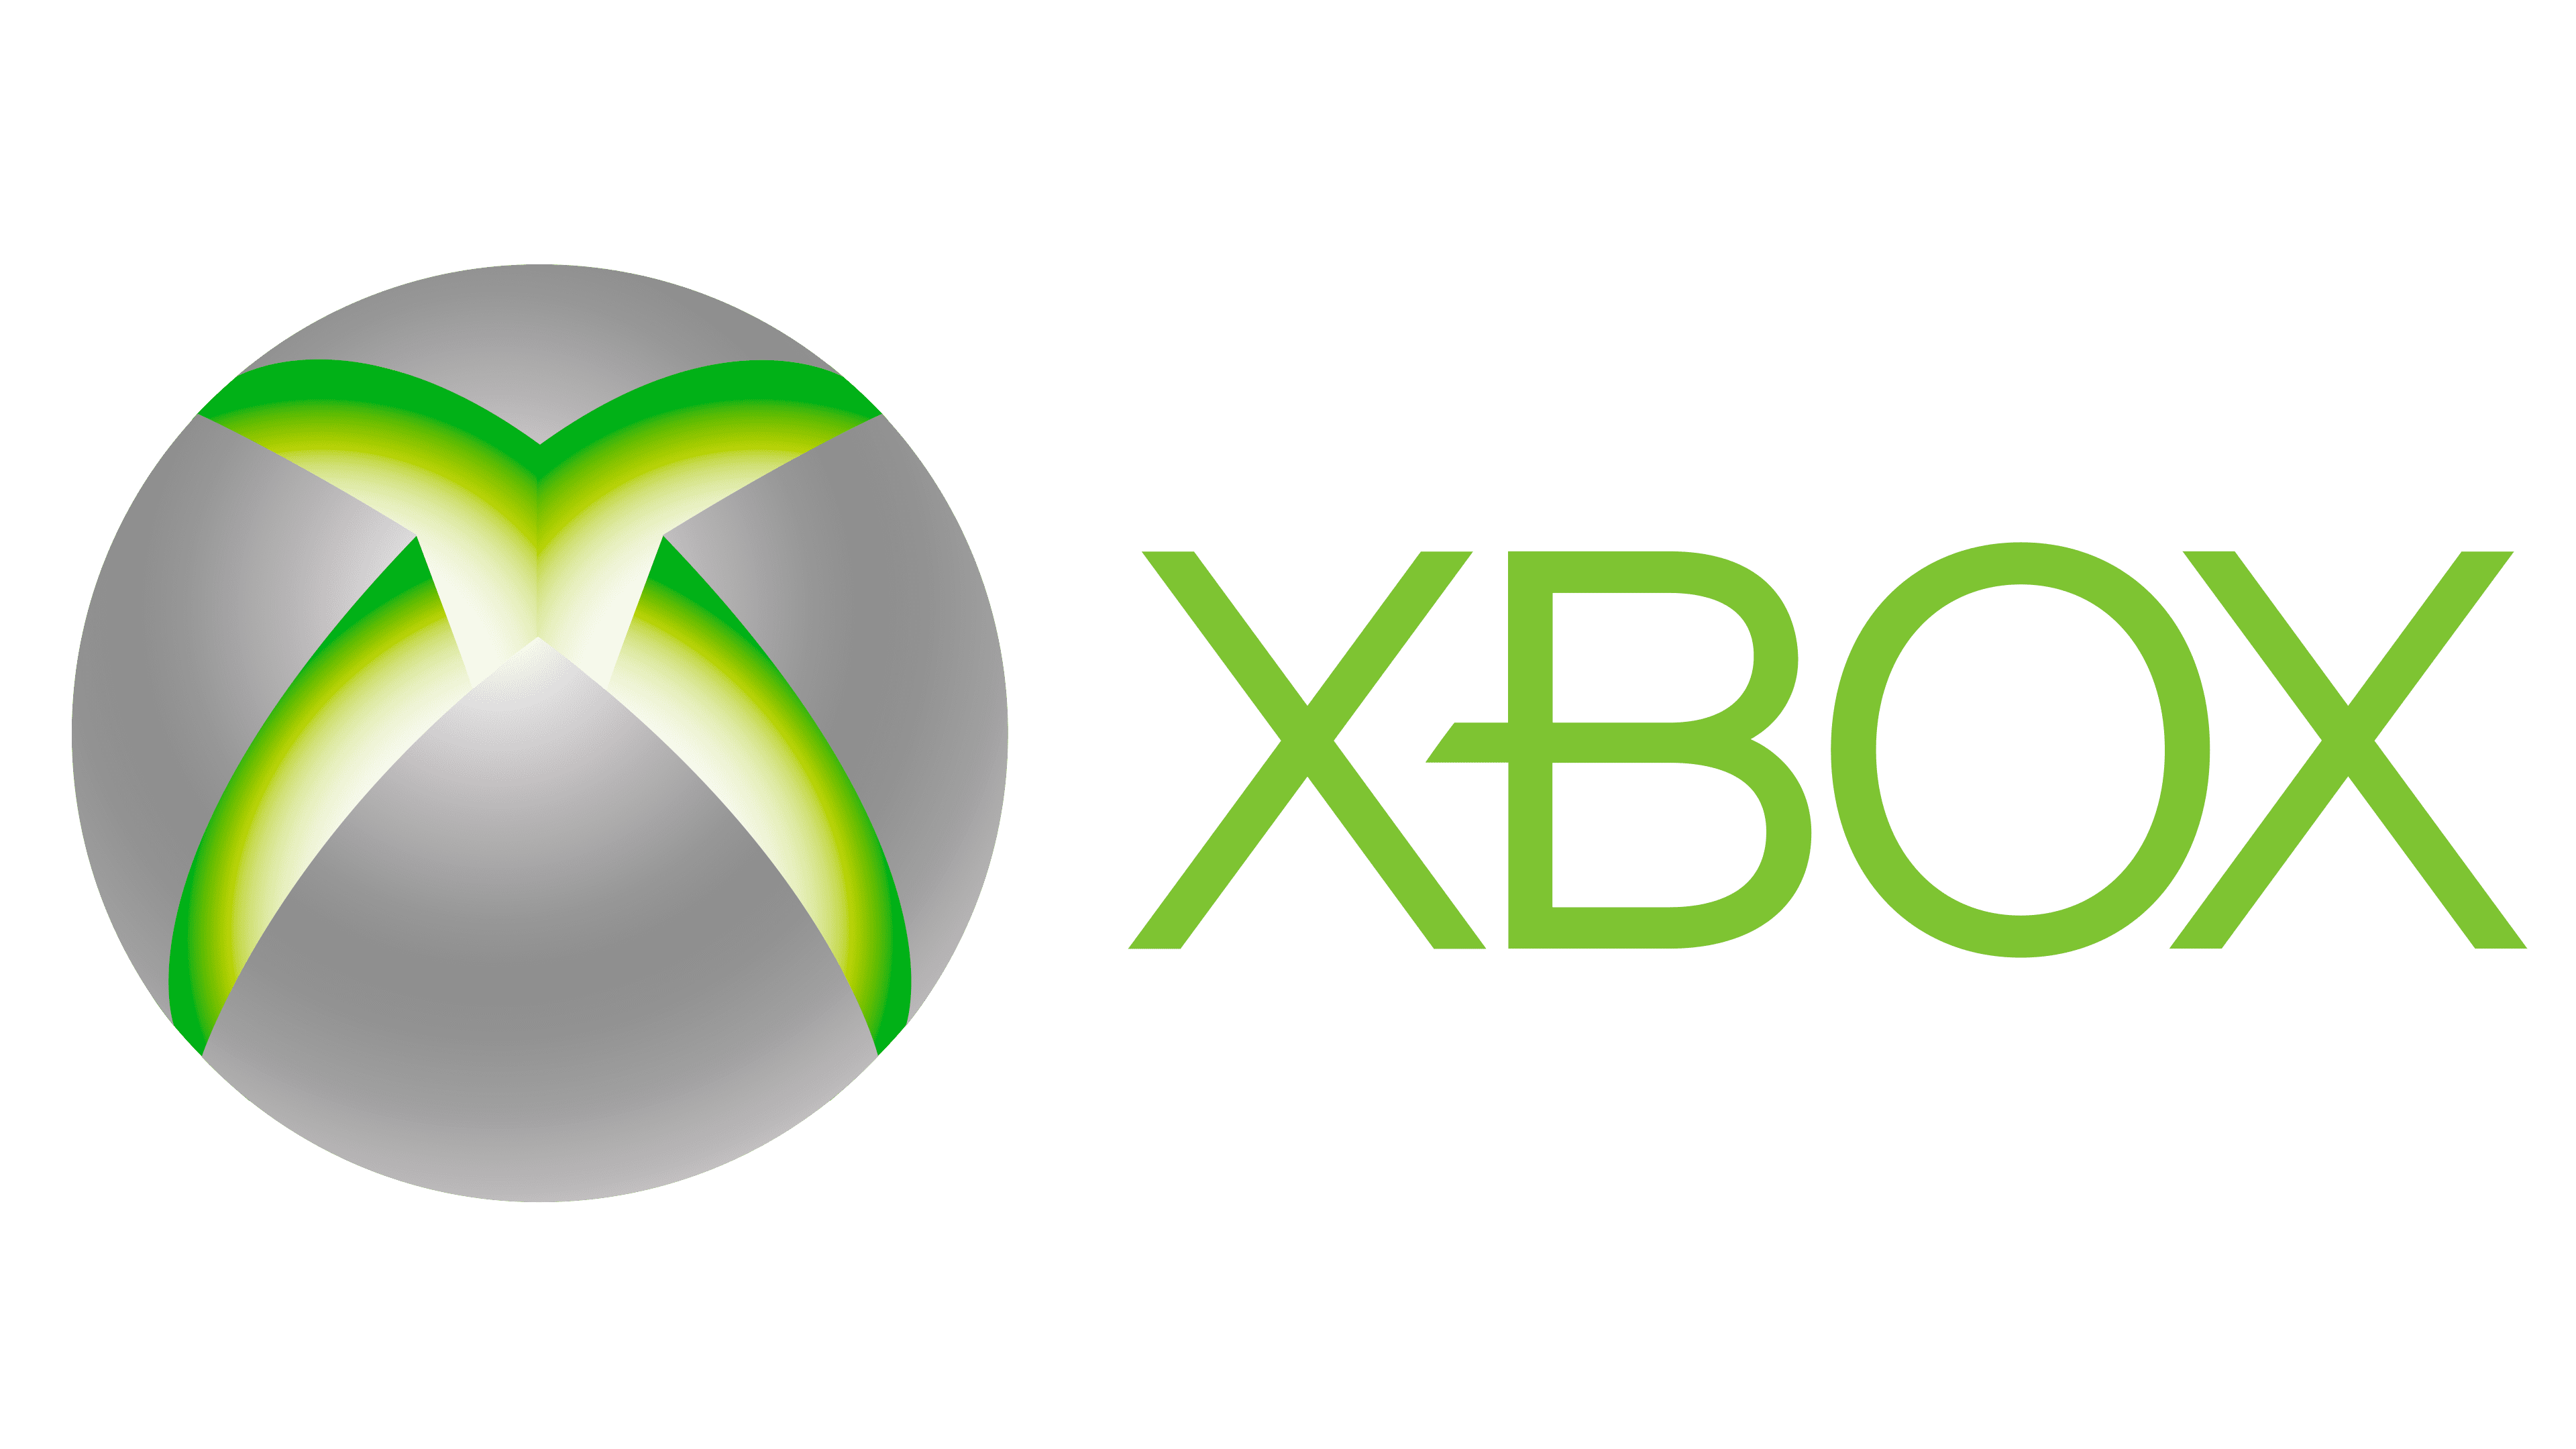 Логос 2005. Xbox 360 logo. Xbox 360 logo 2010. Xbox 2001 logo. Xbox 360 s logo.